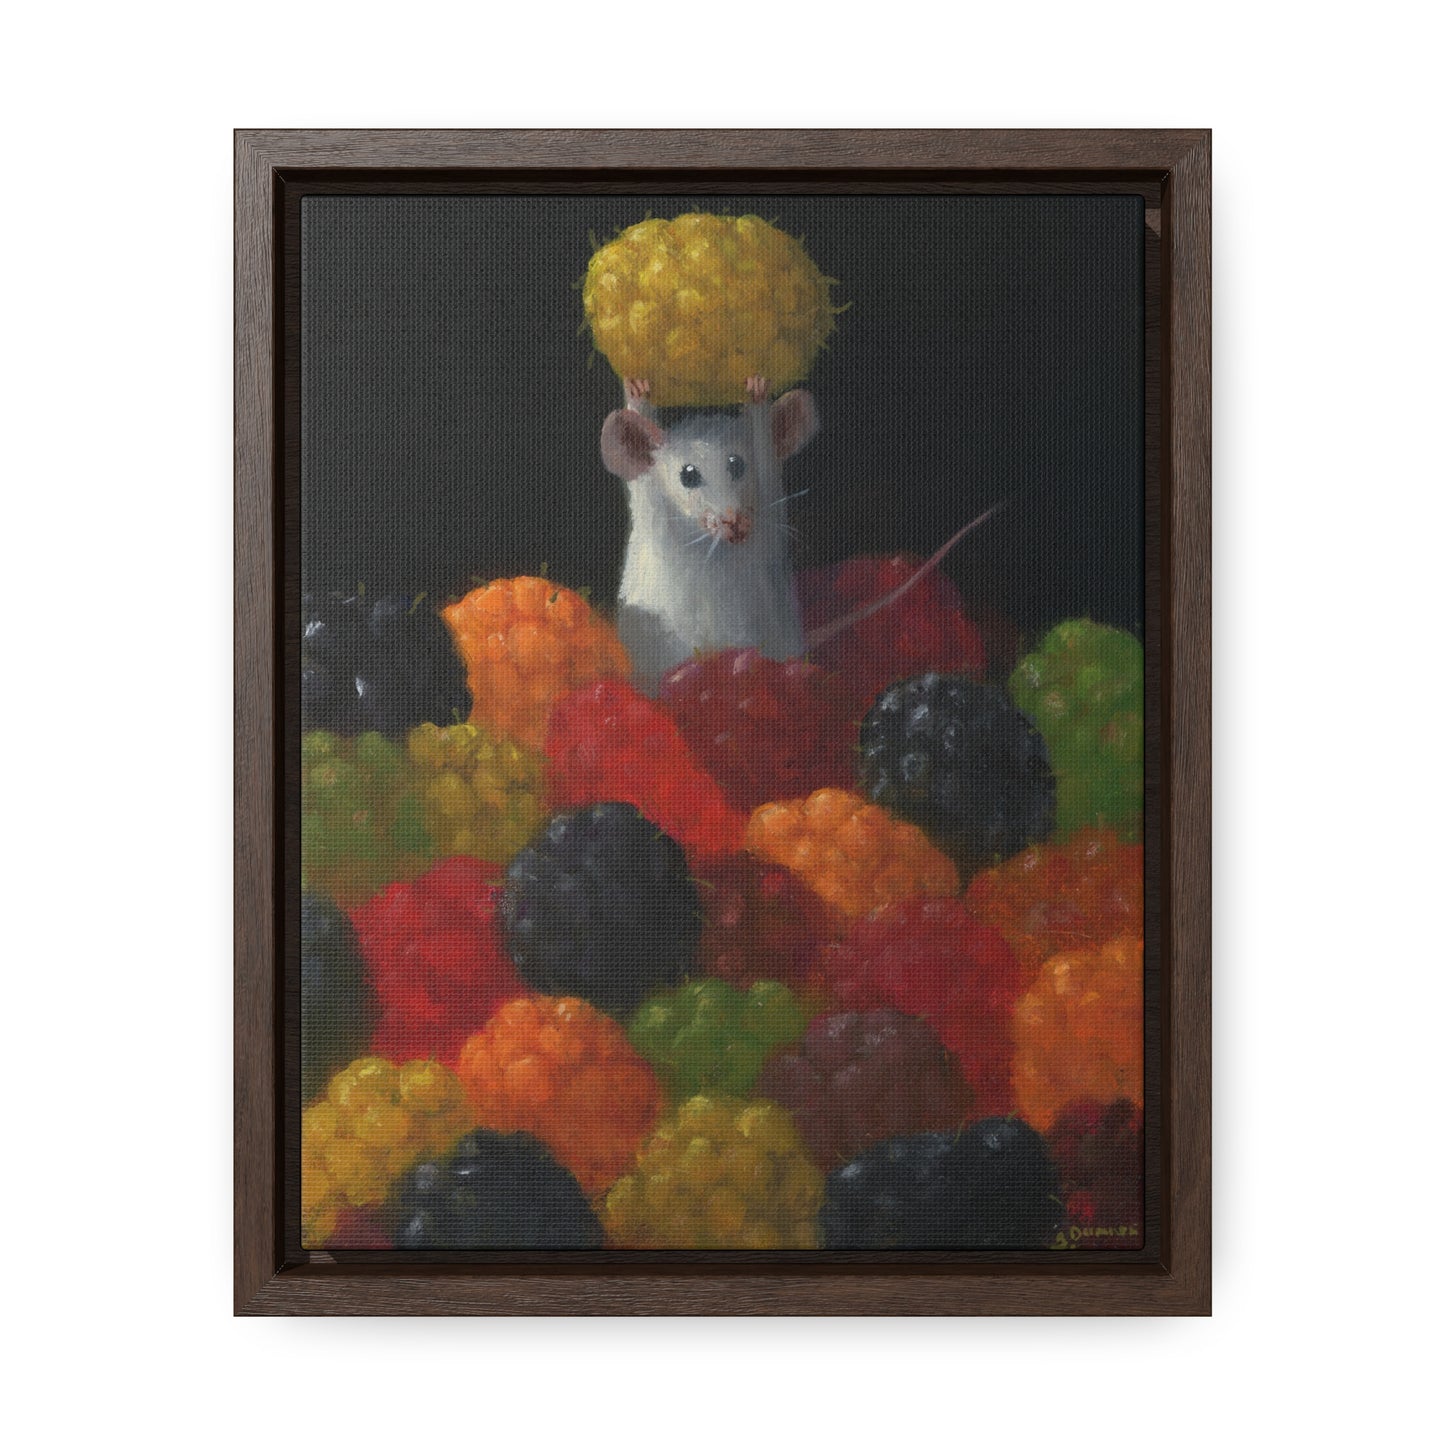 Stuart Dunkel: "Raspberry Party" - Framed Canvas Reproduction